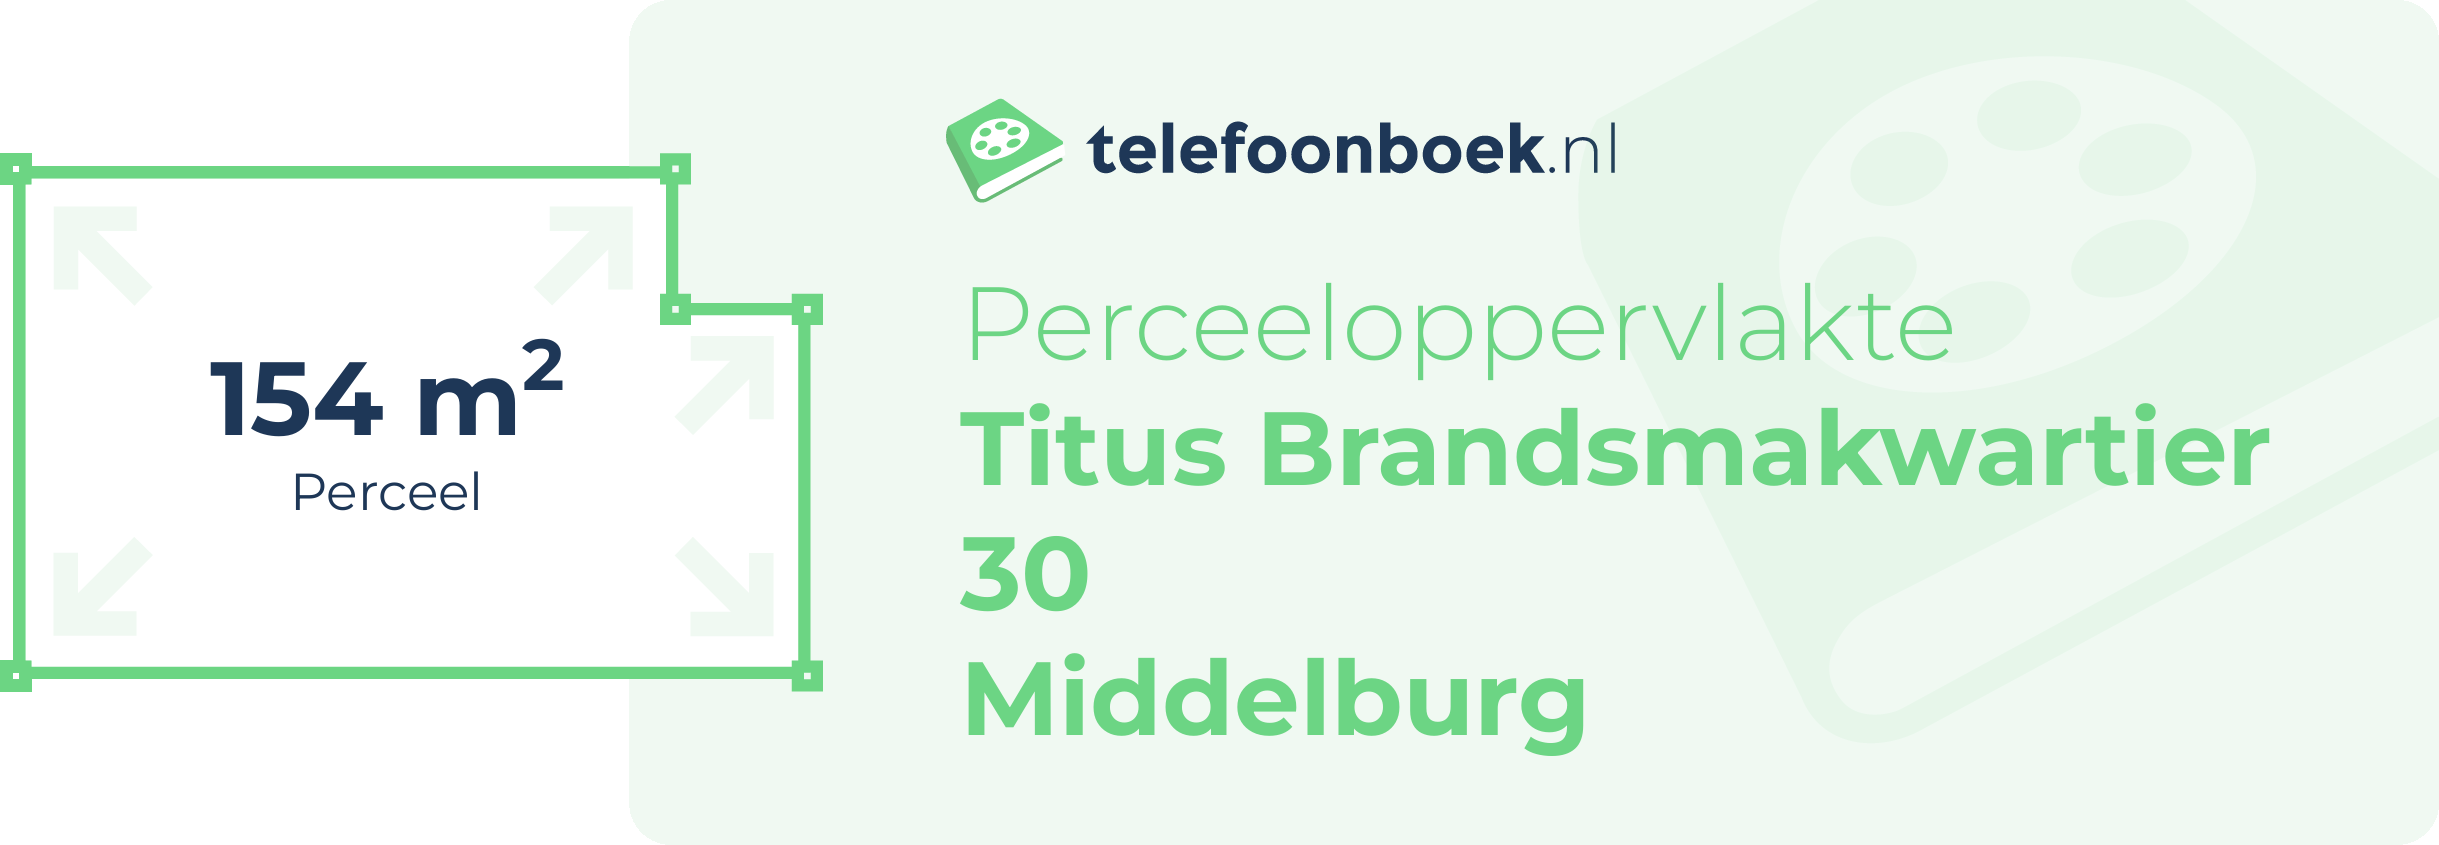 Perceeloppervlakte Titus Brandsmakwartier 30 Middelburg